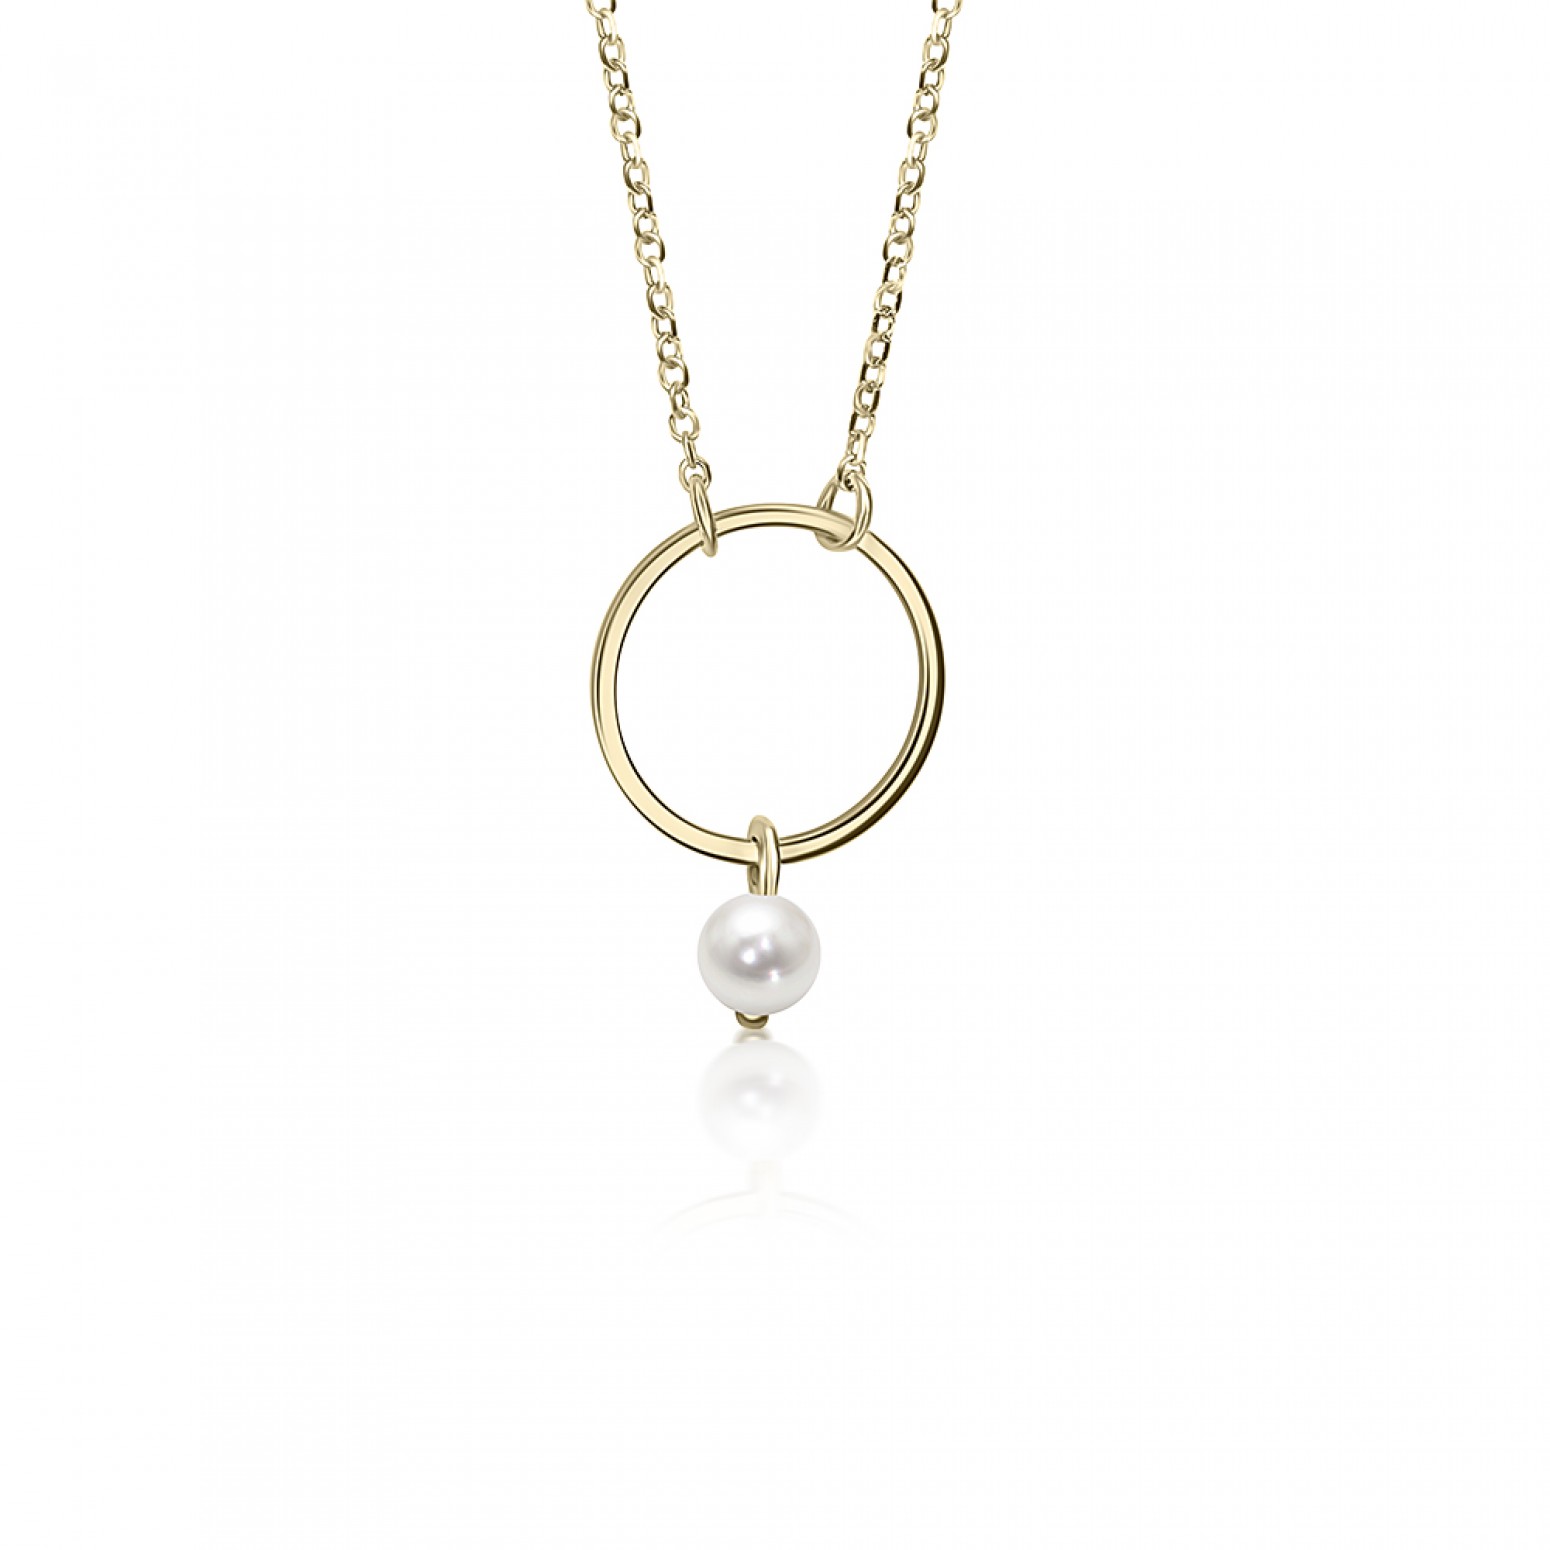 Round necklace, Κ14 gold with pearl ko5596 NECKLACES Κοσμηματα - chrilia.gr